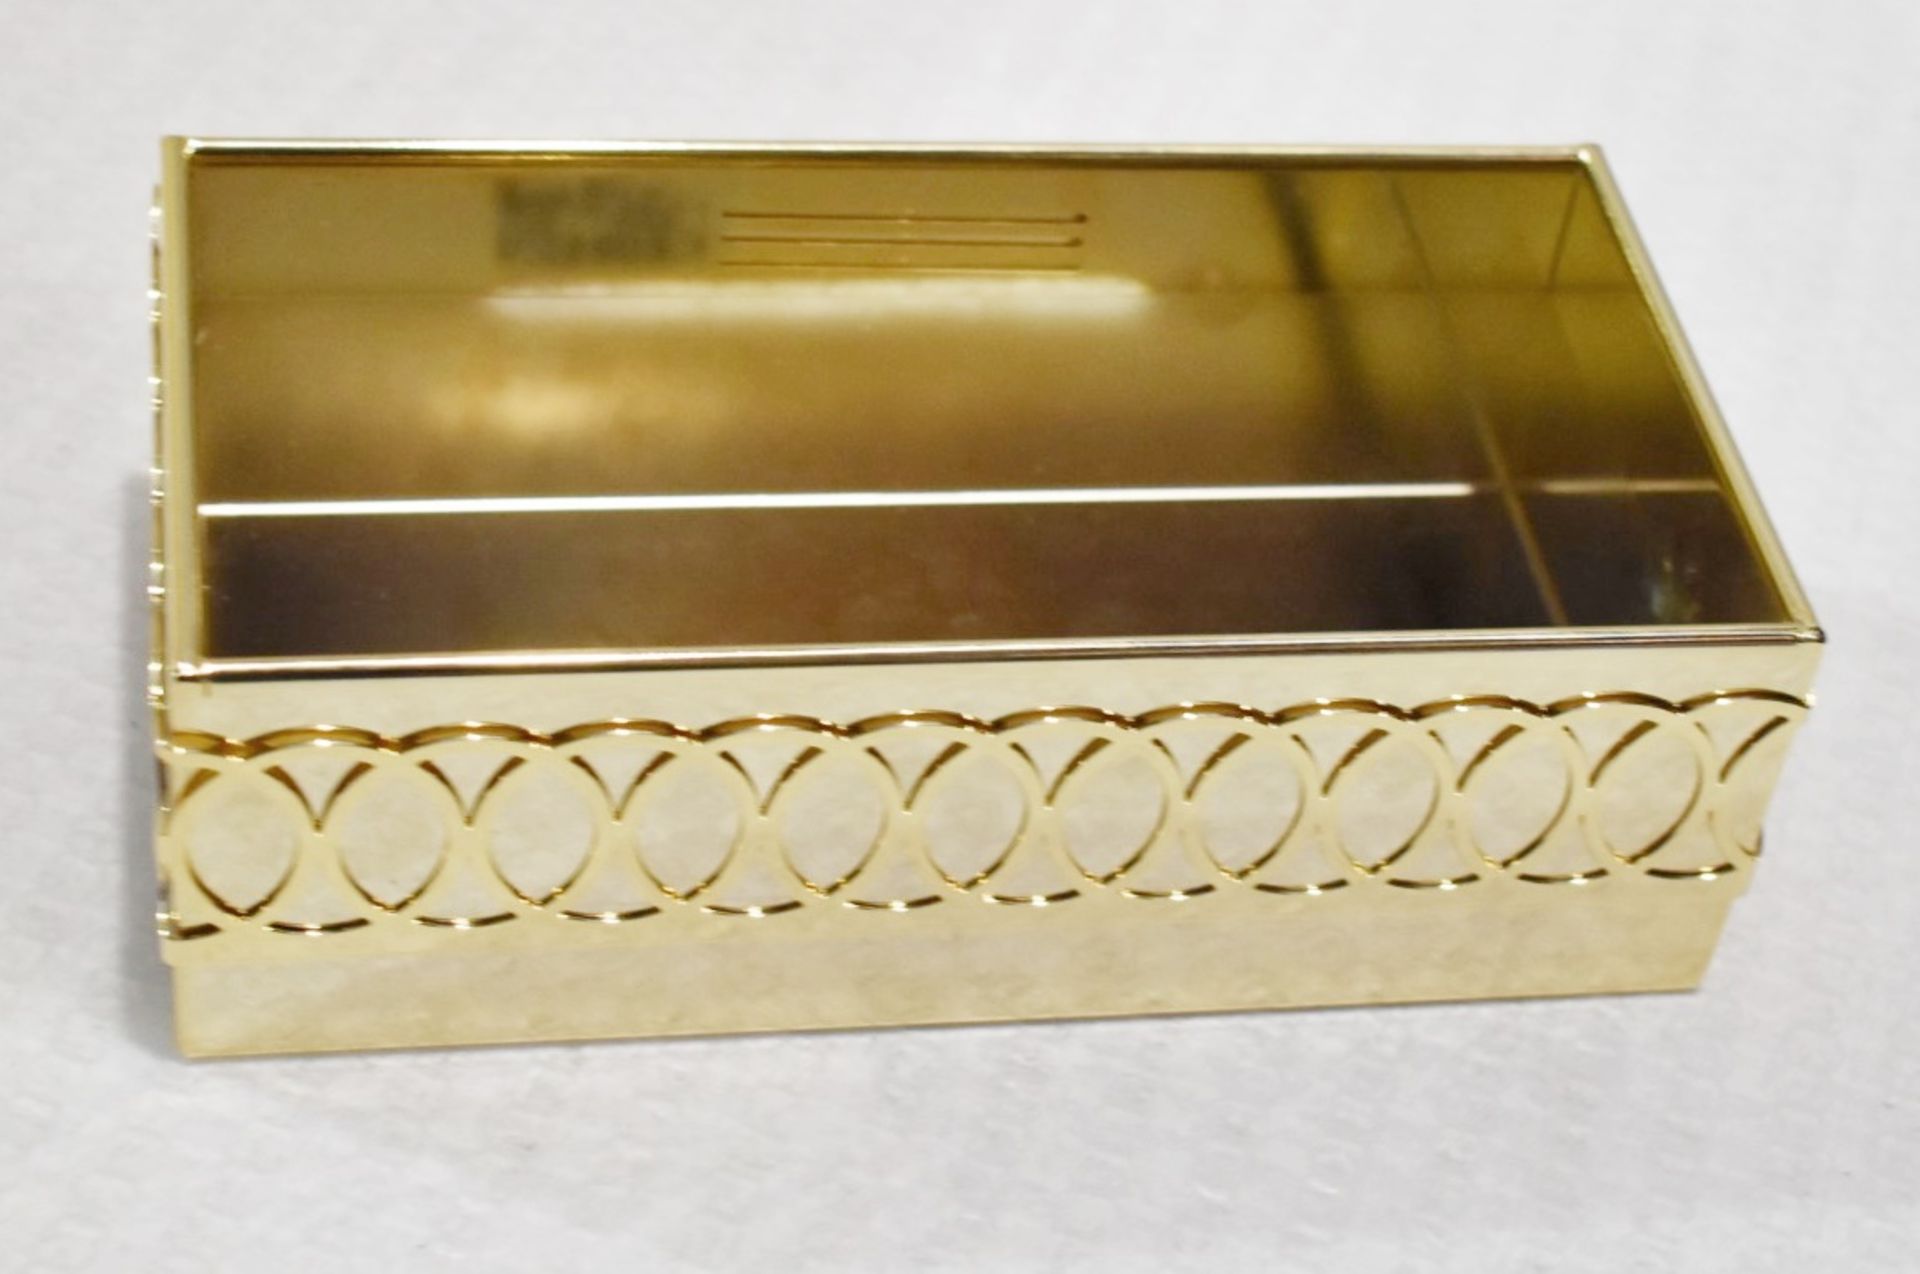 1 x VILLARI 'Hiroito' Luxury Italian Made Gold-Plated Tissue Box Cover - Original Price £579.00 - Image 5 of 6